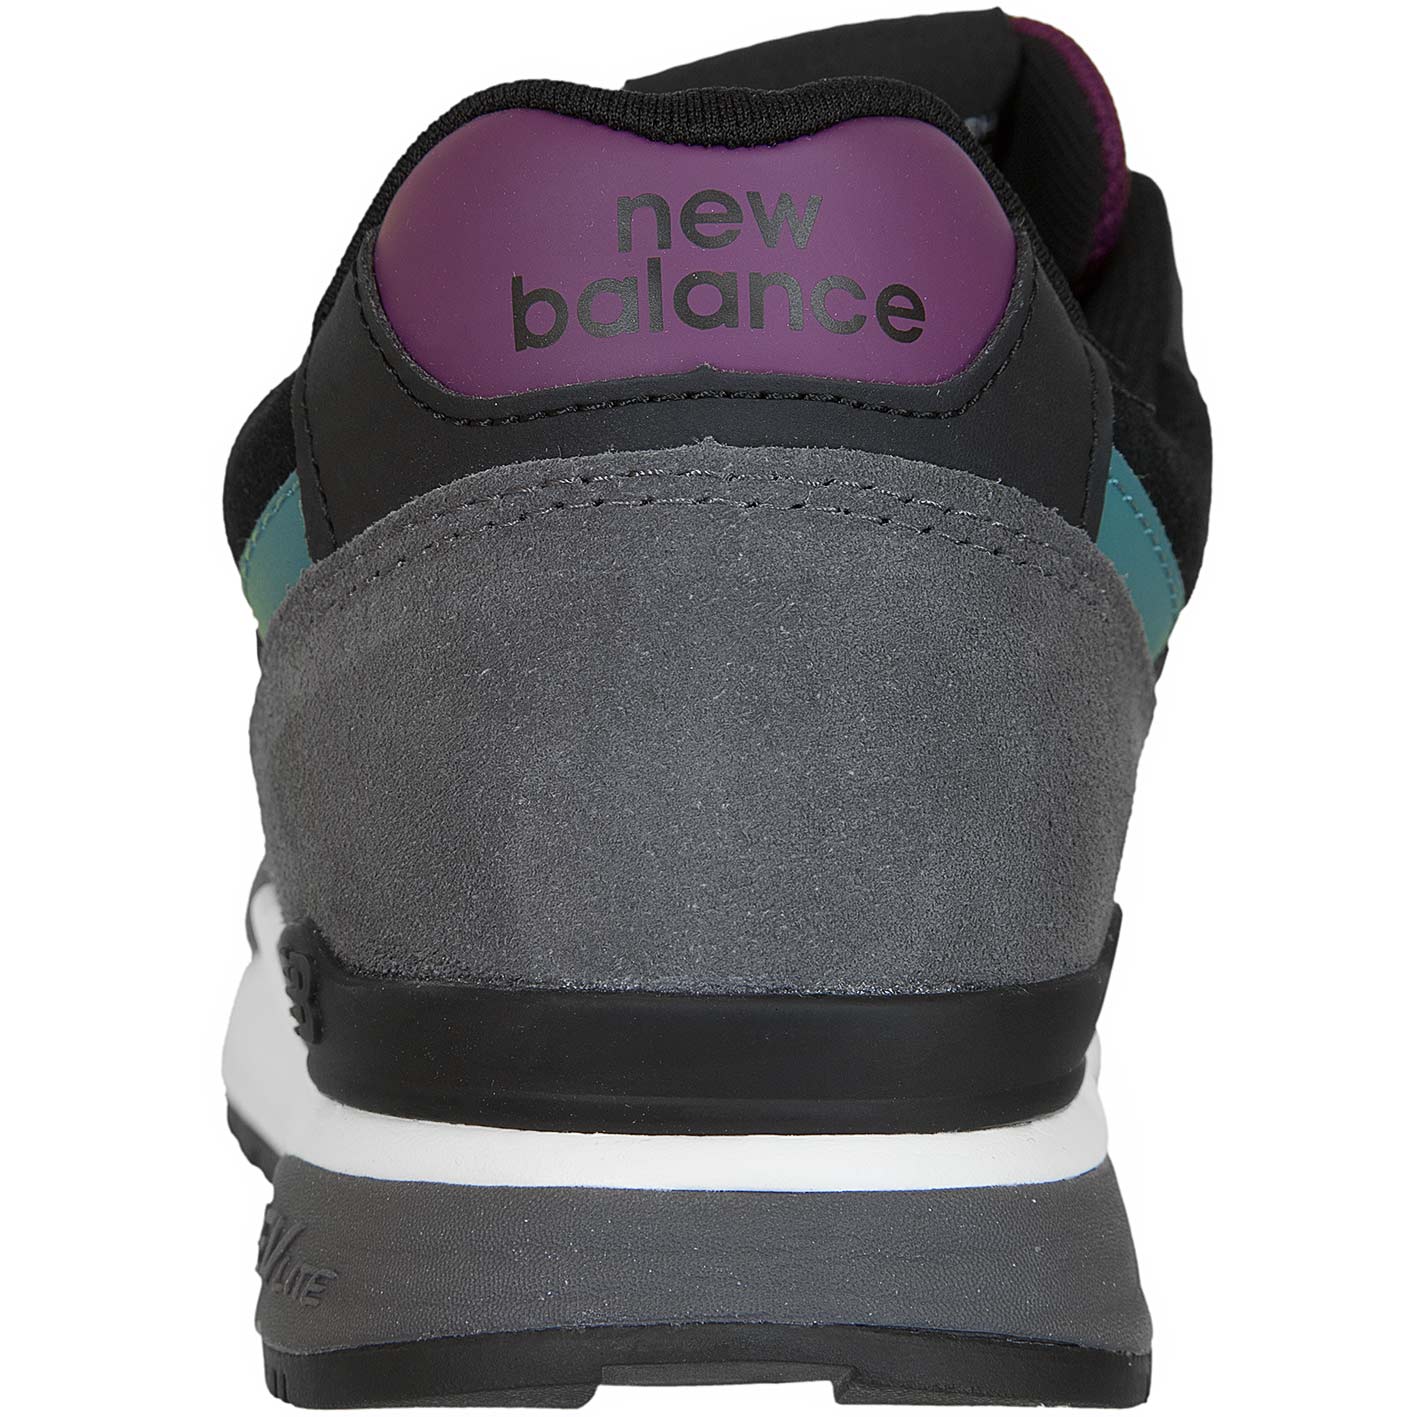 ☆ New Balance Sneaker 840 Leder/Textil grau/schwarz/türkis - hier bestellen!